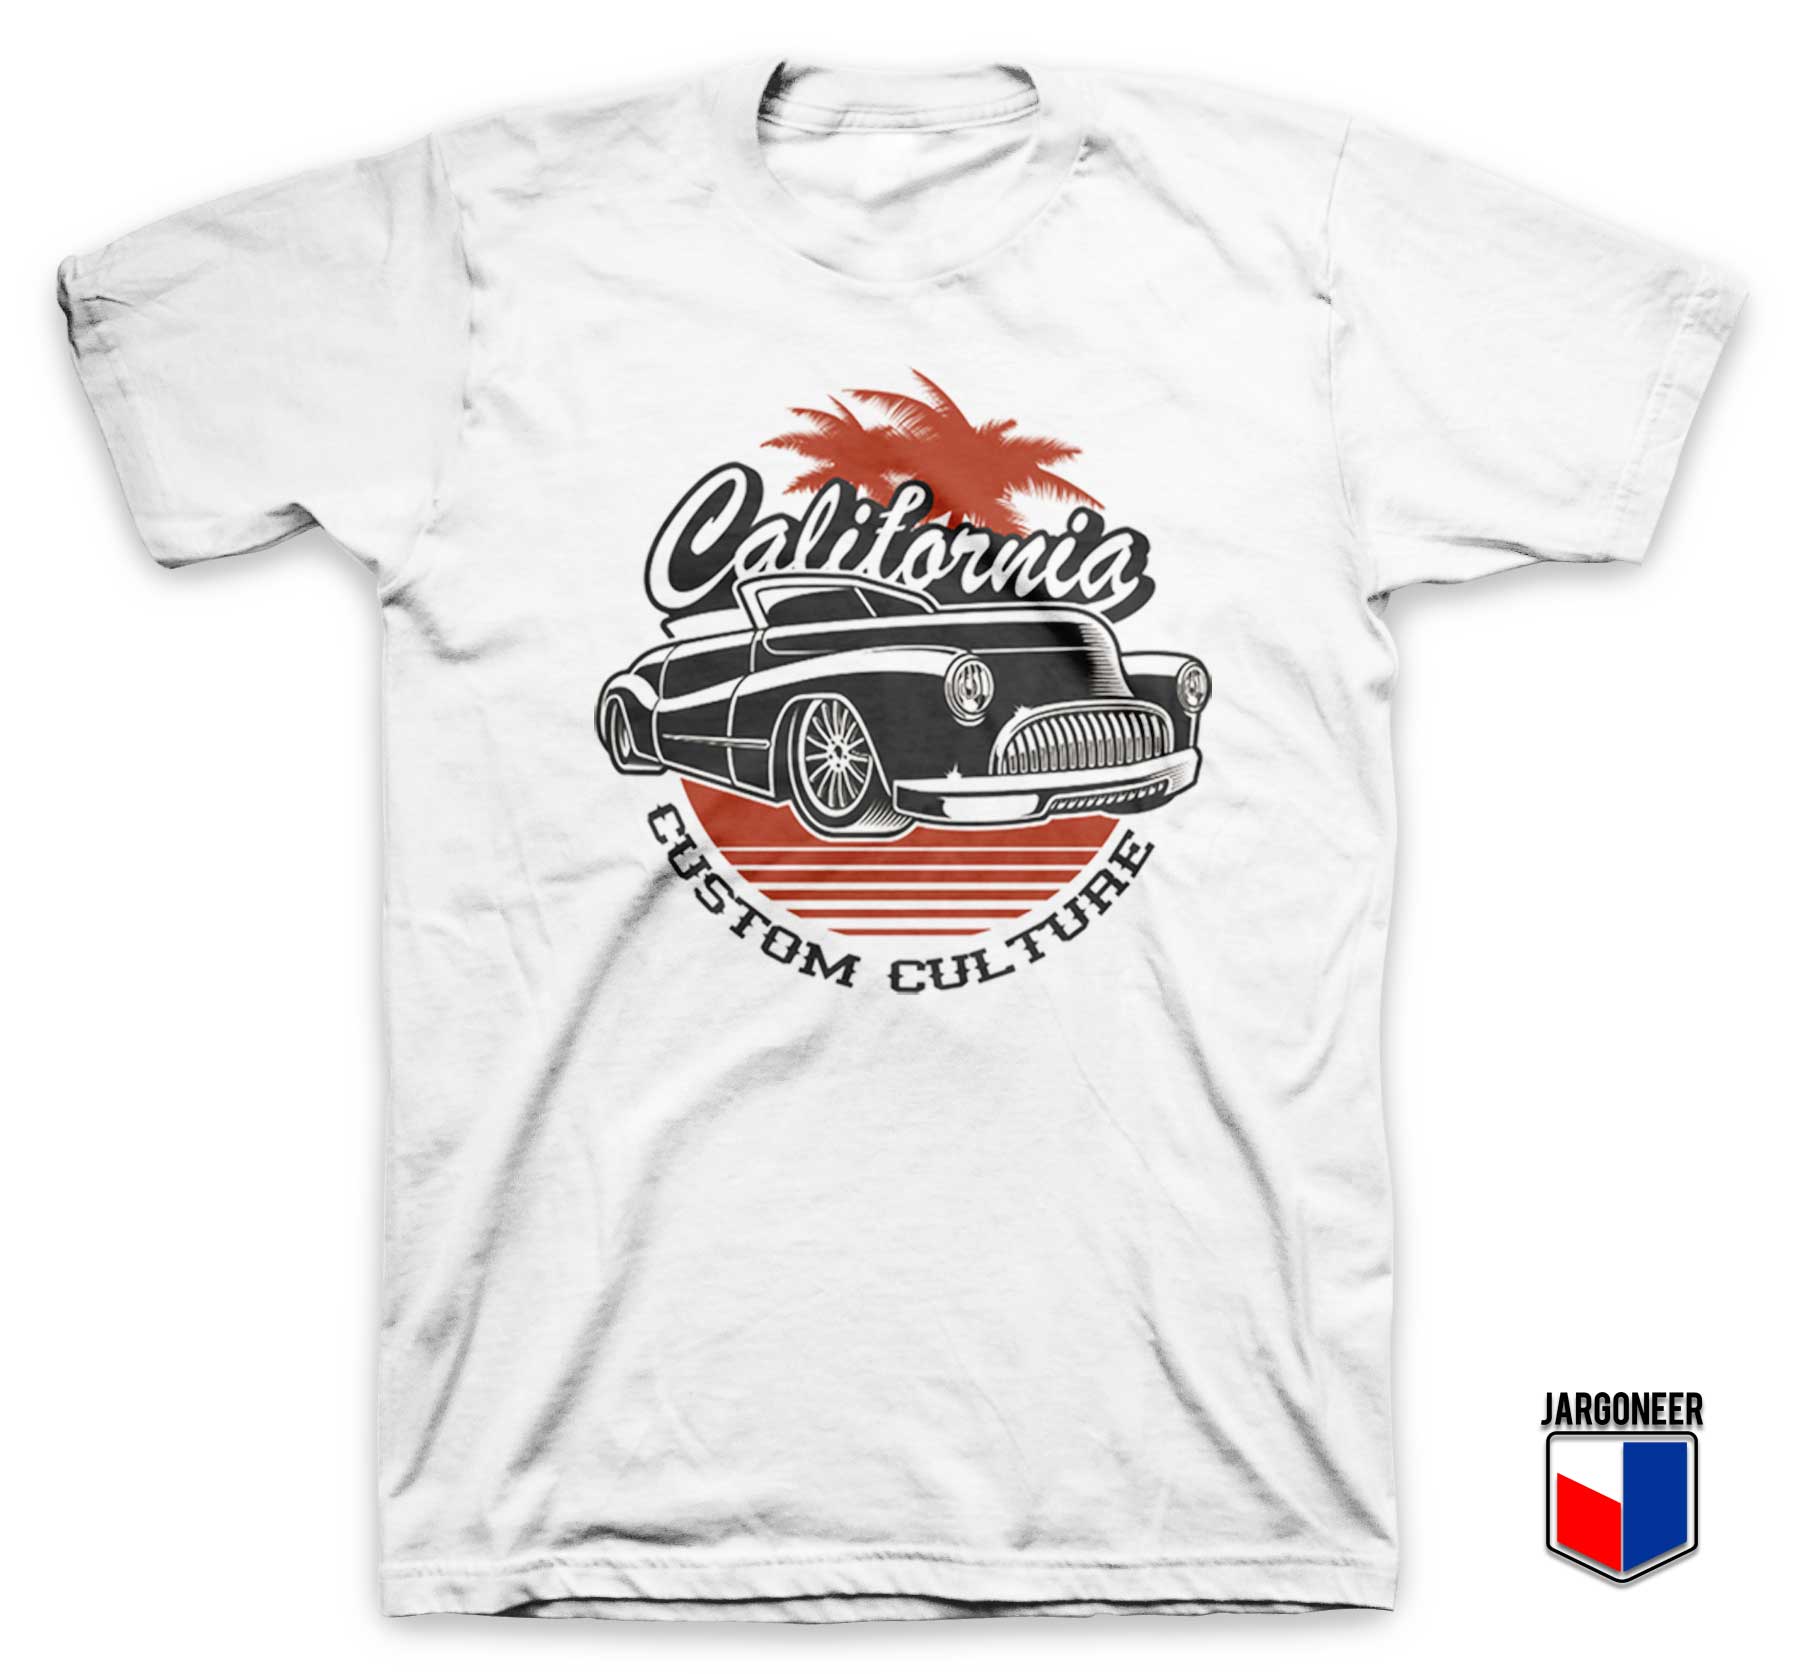 Calofornia Custom Culture T Shirt - Shop Unique Graphic Cool Shirt Designs